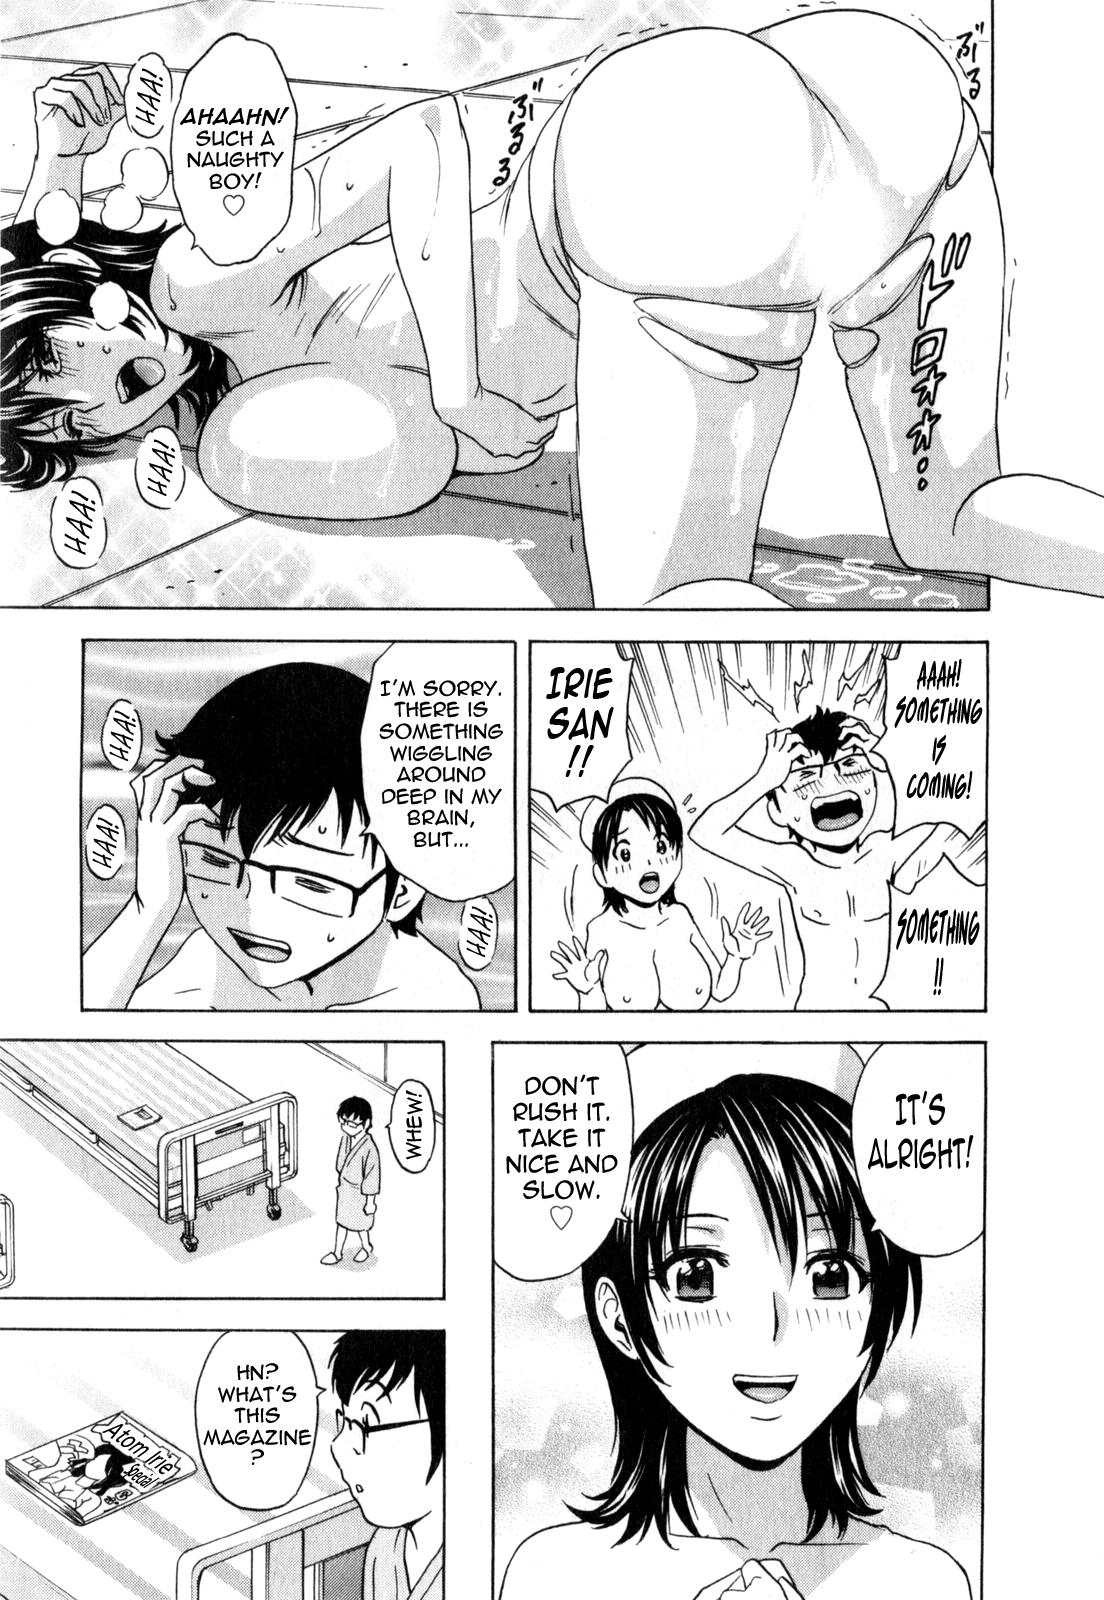 [Hidemaru] Life with Married Women Just Like a Manga 3 - Ch. 1-8 [English] {Tadanohito} 163